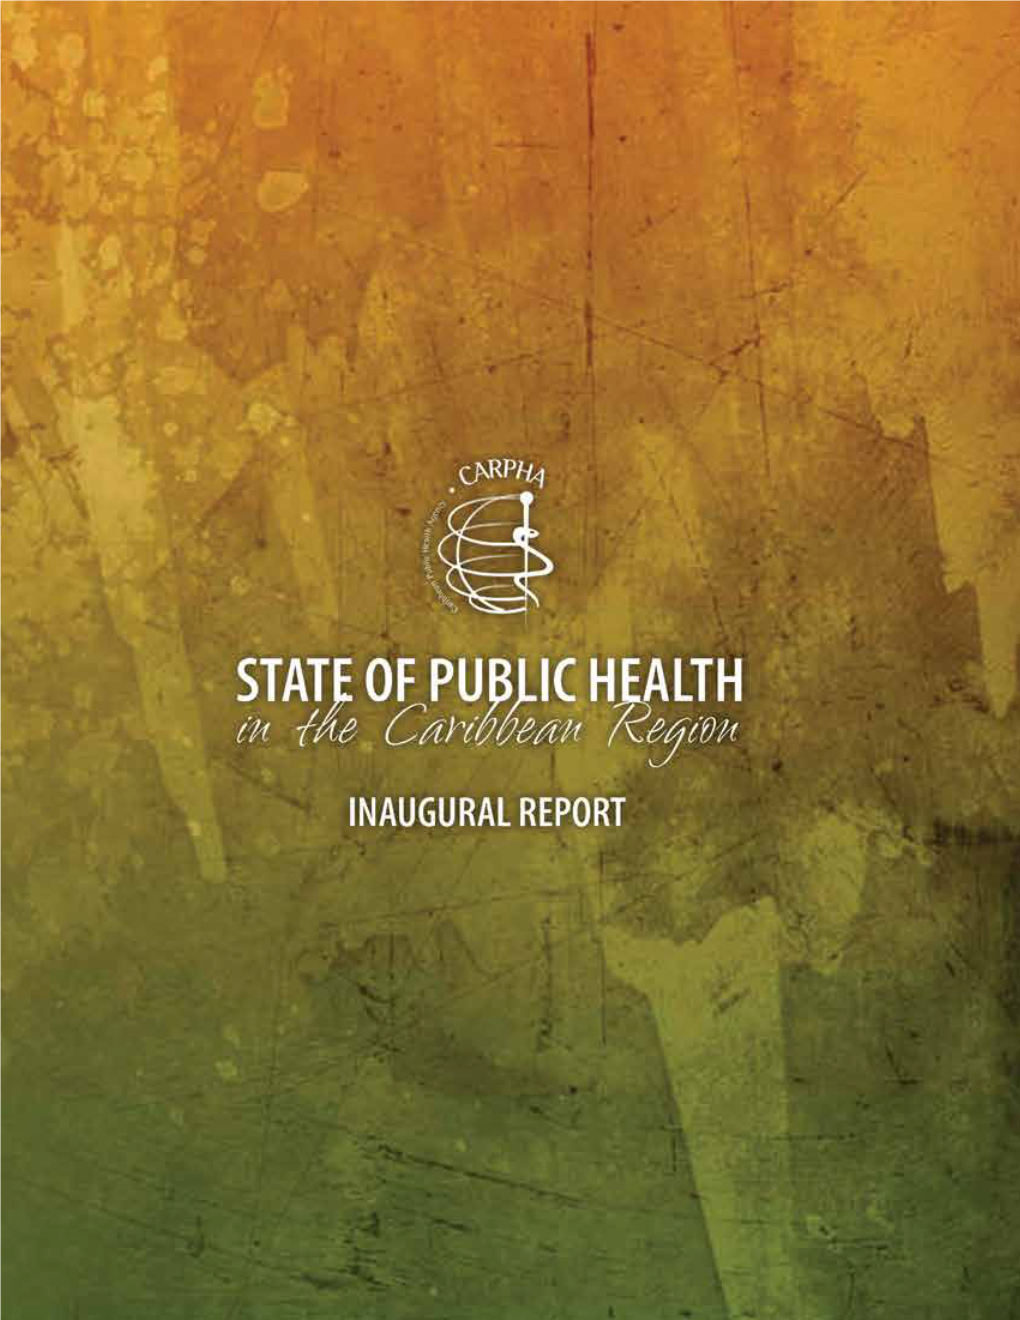 CARPHA State of Public Health Inaugural Report 2013